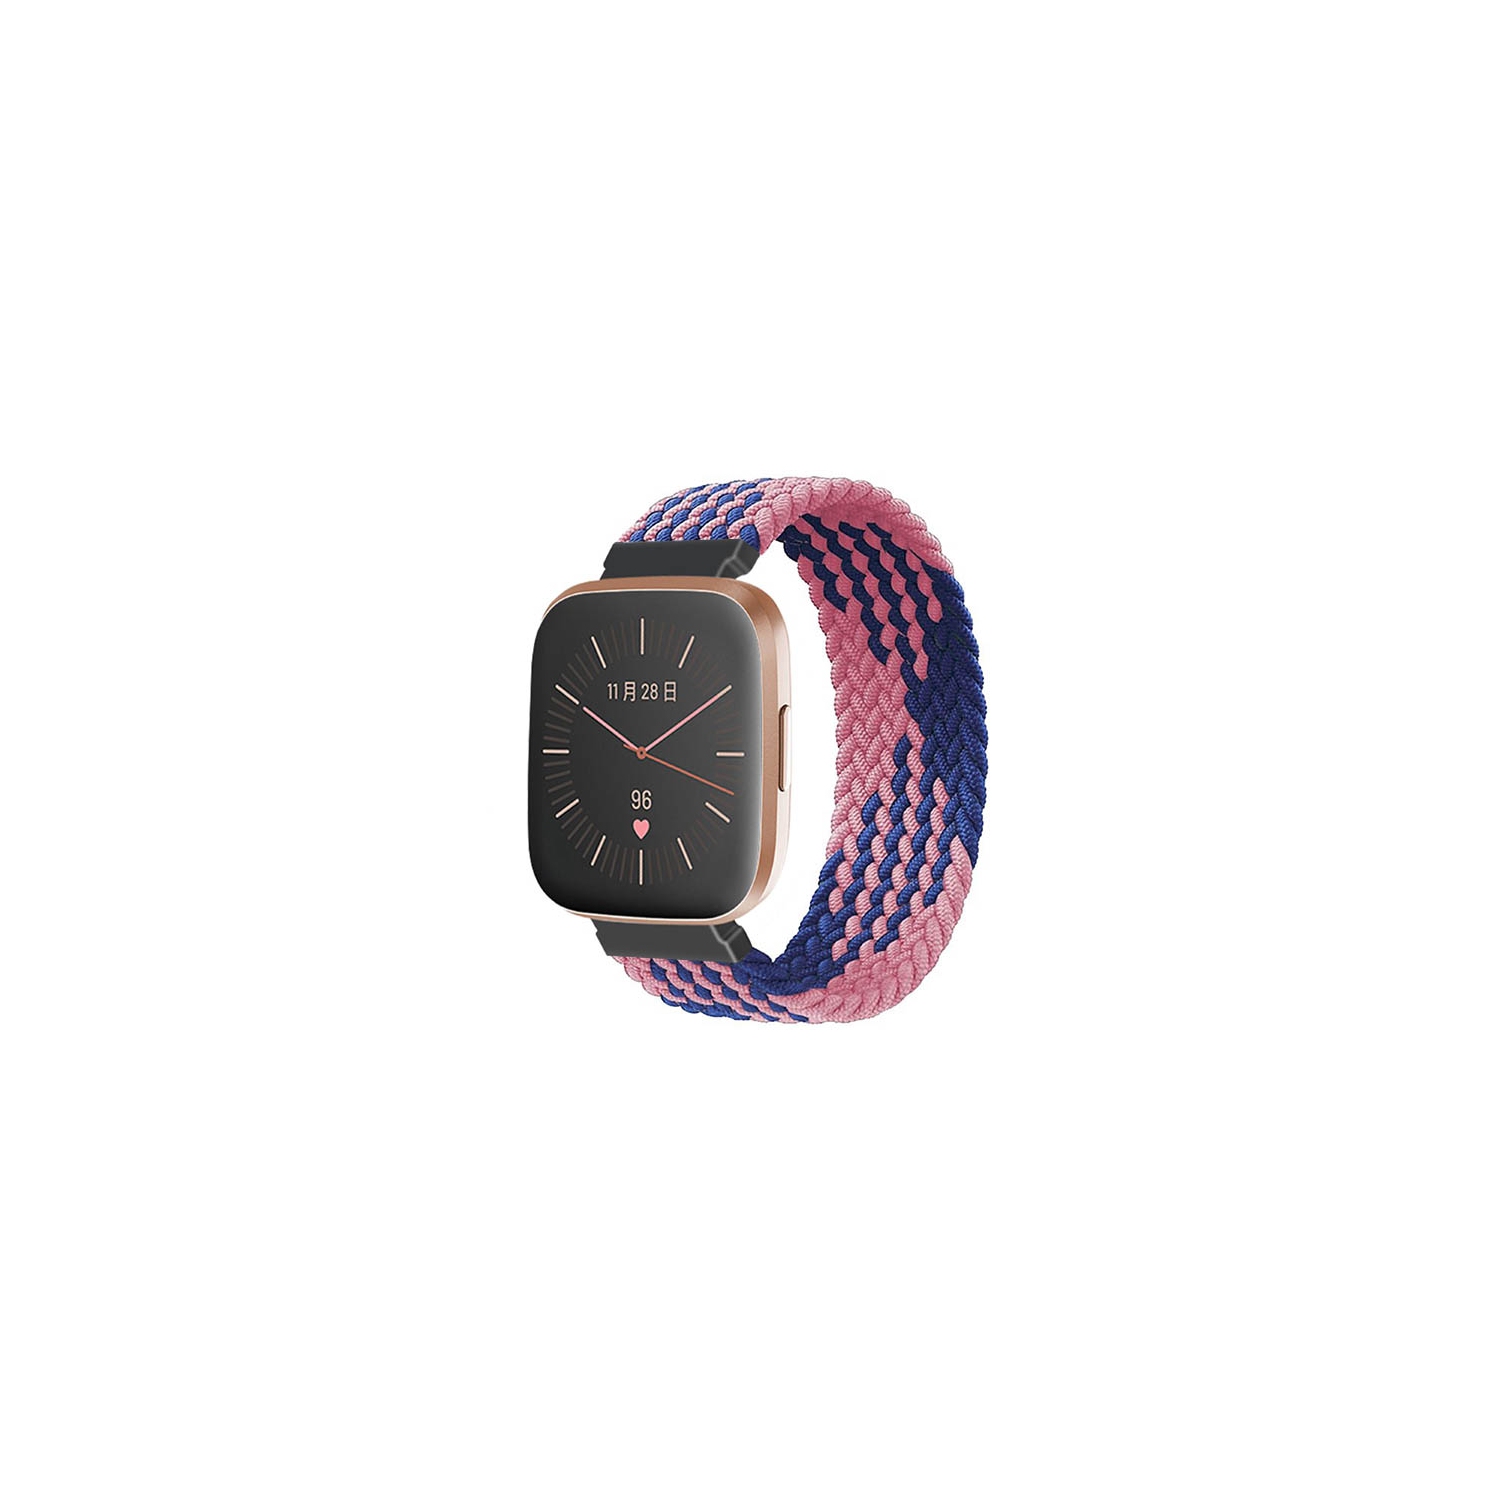 StrapsCo Patterned Elastic Nylon Watch Band Strap for Fitbit Versa & Versa 2 - M - Fits 6.2" - 6.5" Wrist - Pink & Blue Buffalo